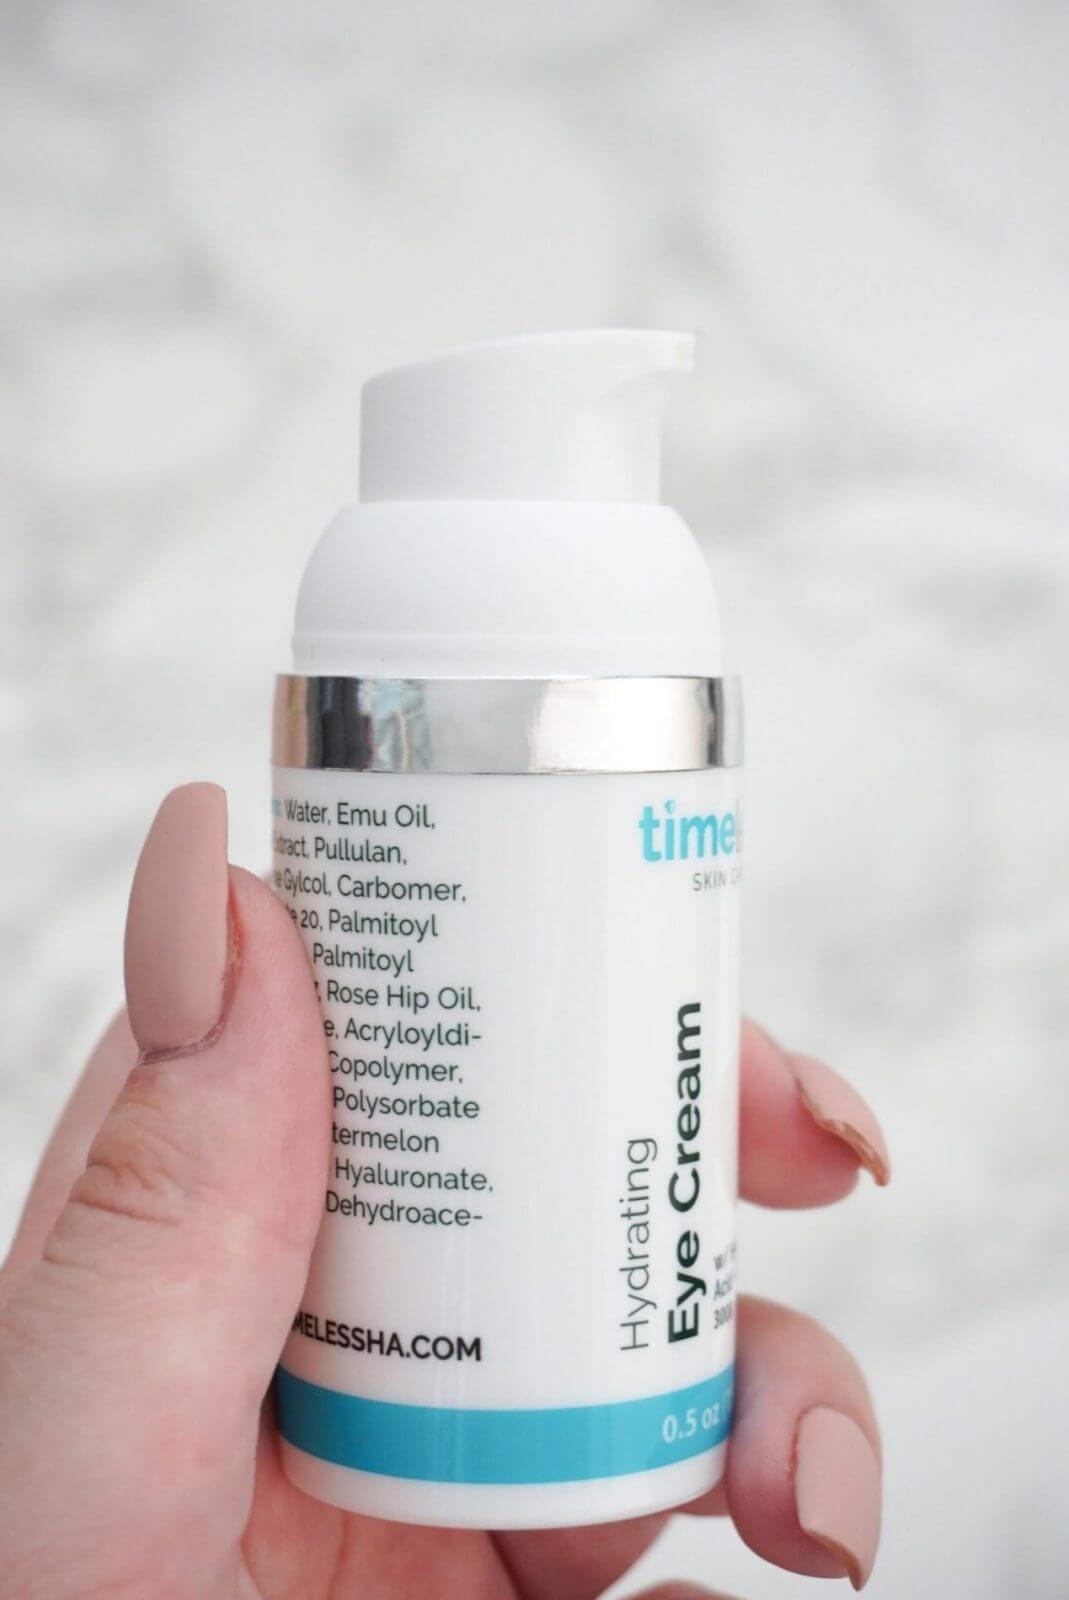 Timeless Skincare Hydrating Eye Cream